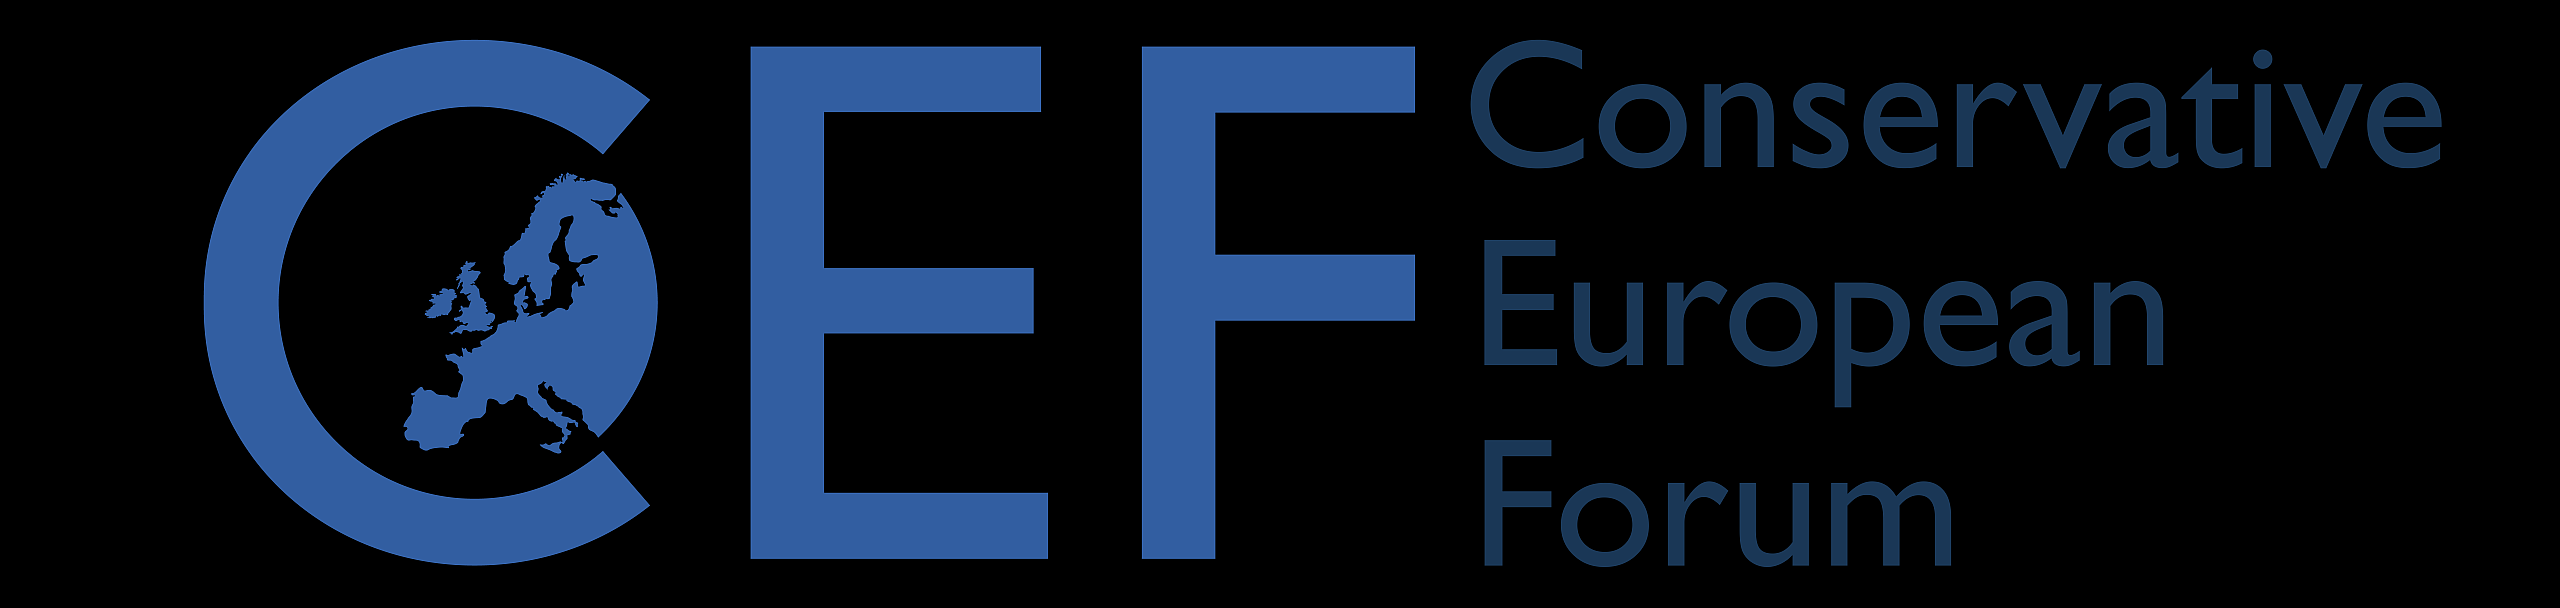 Conservative European Forum logo